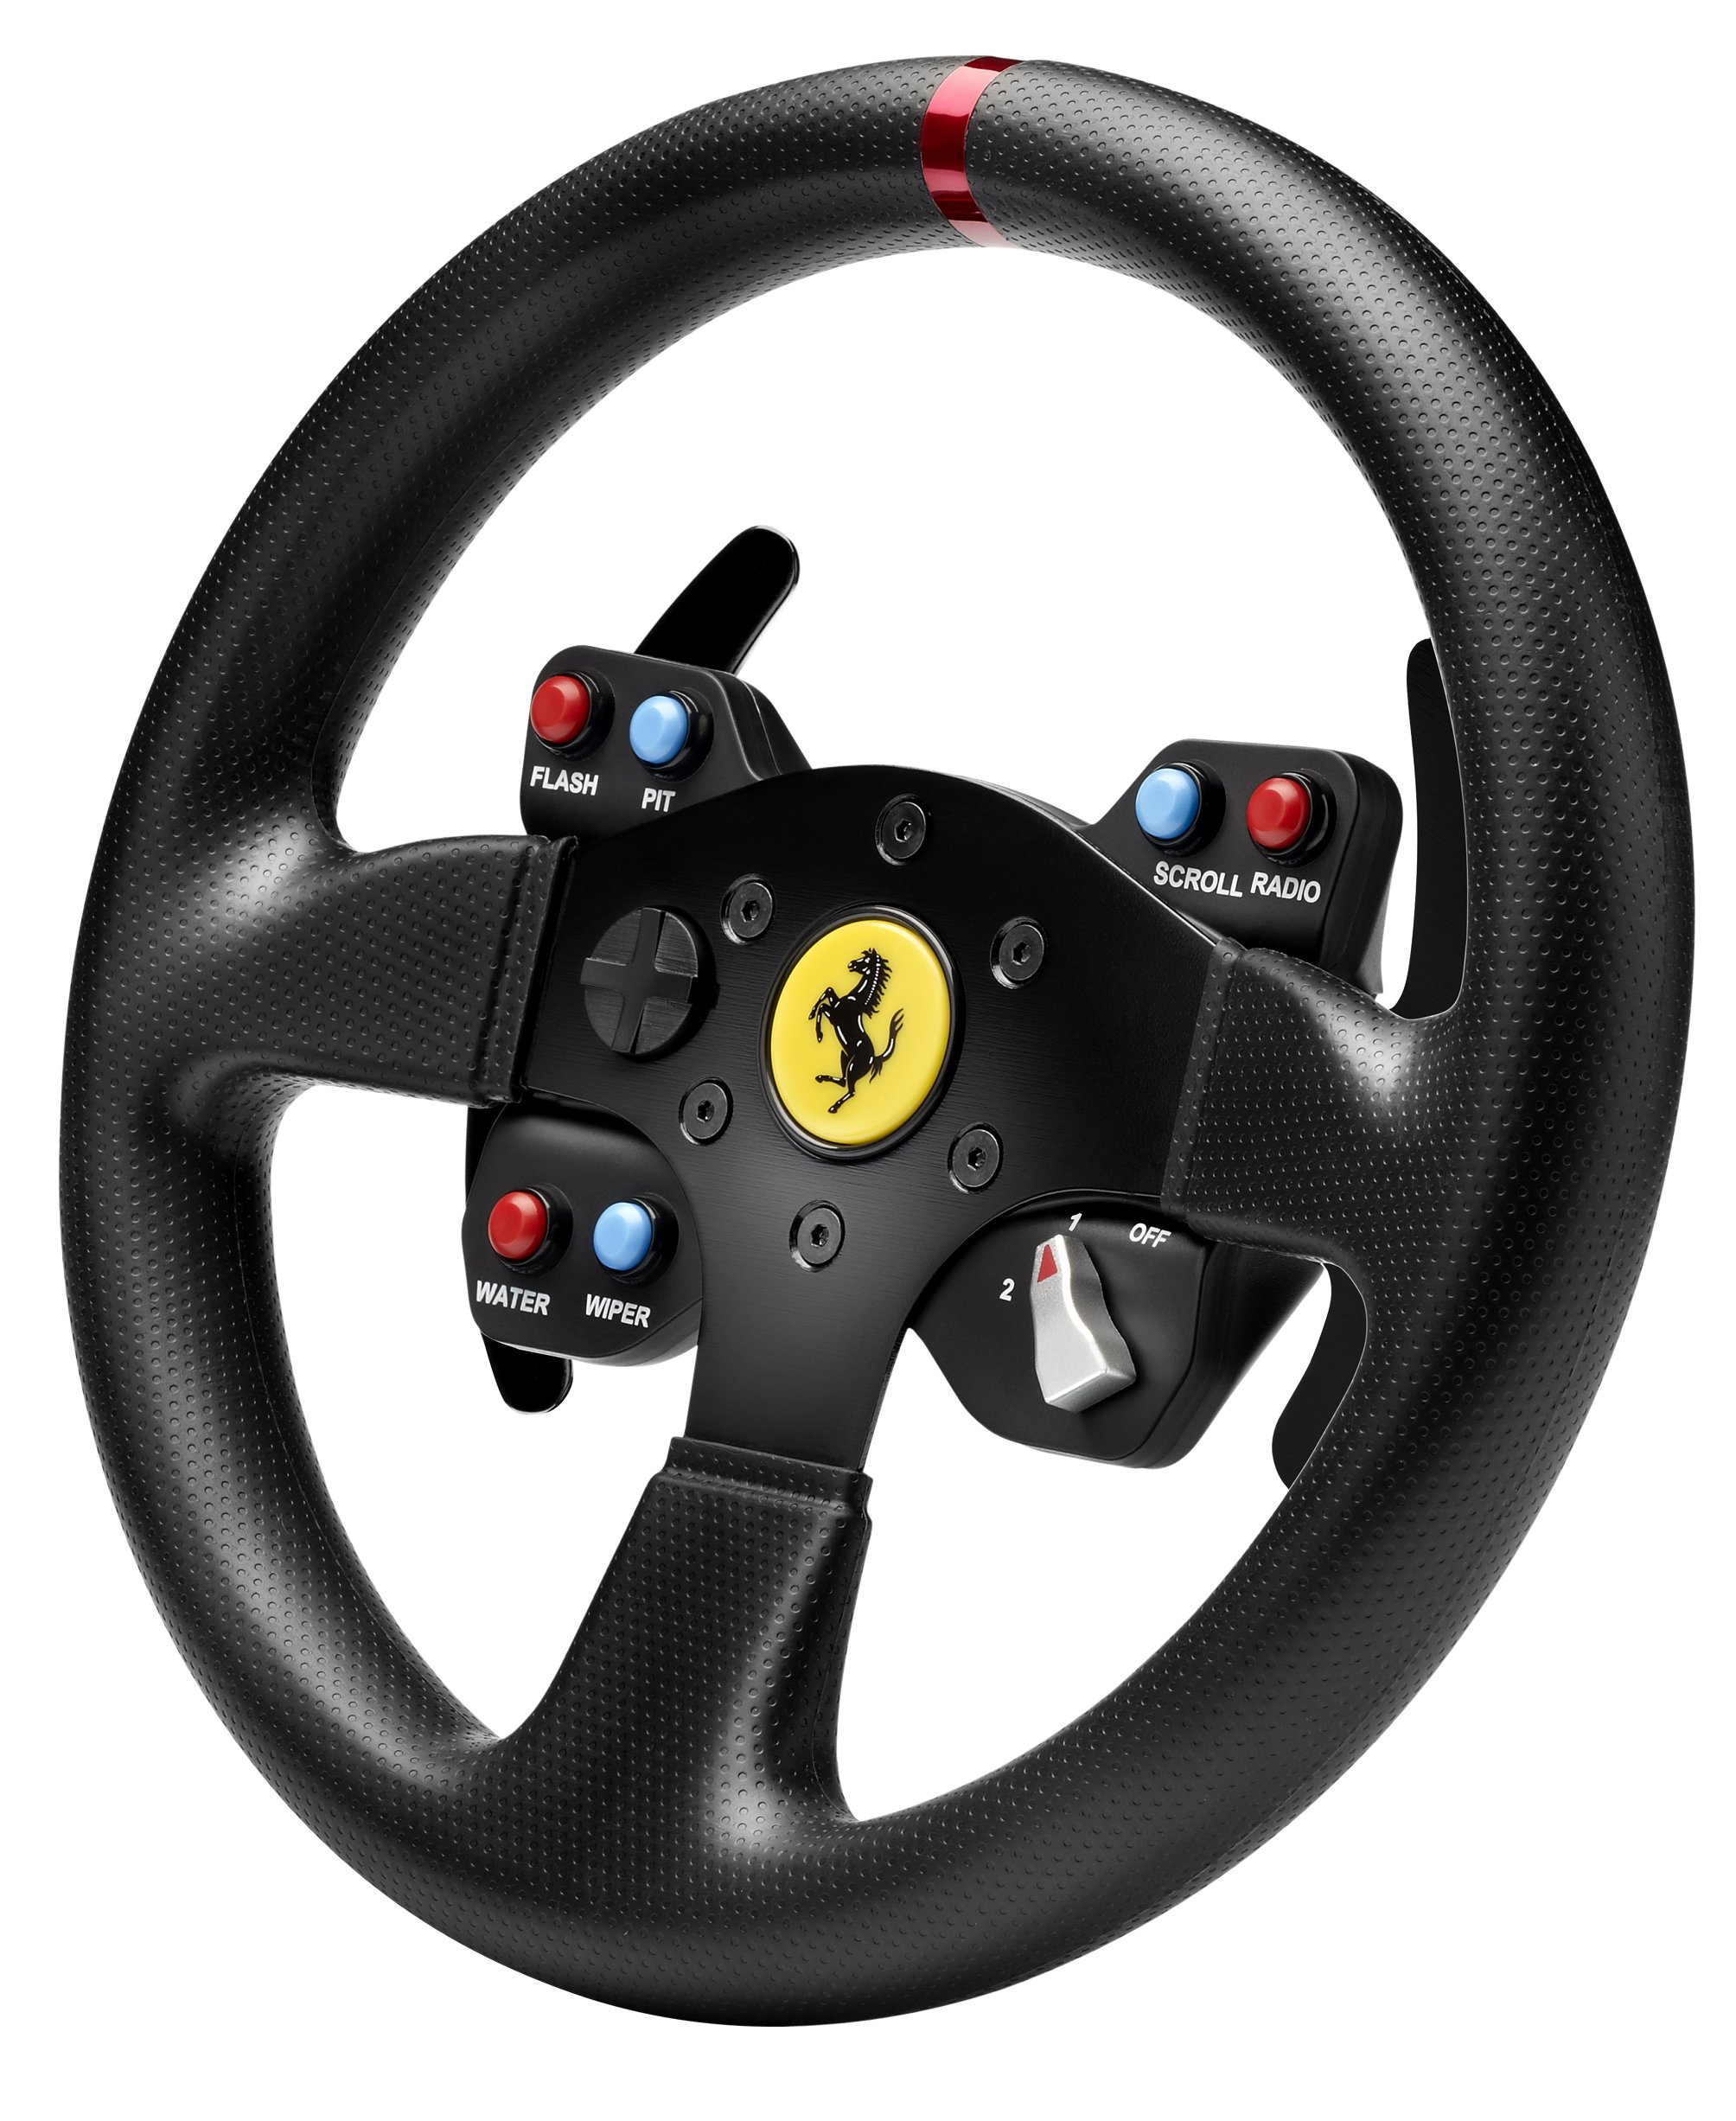 Thrustmaster Ferrari 458 Challenge Wheel Add-On (XBOX Series X/S, One, PS5, PS4, PC)